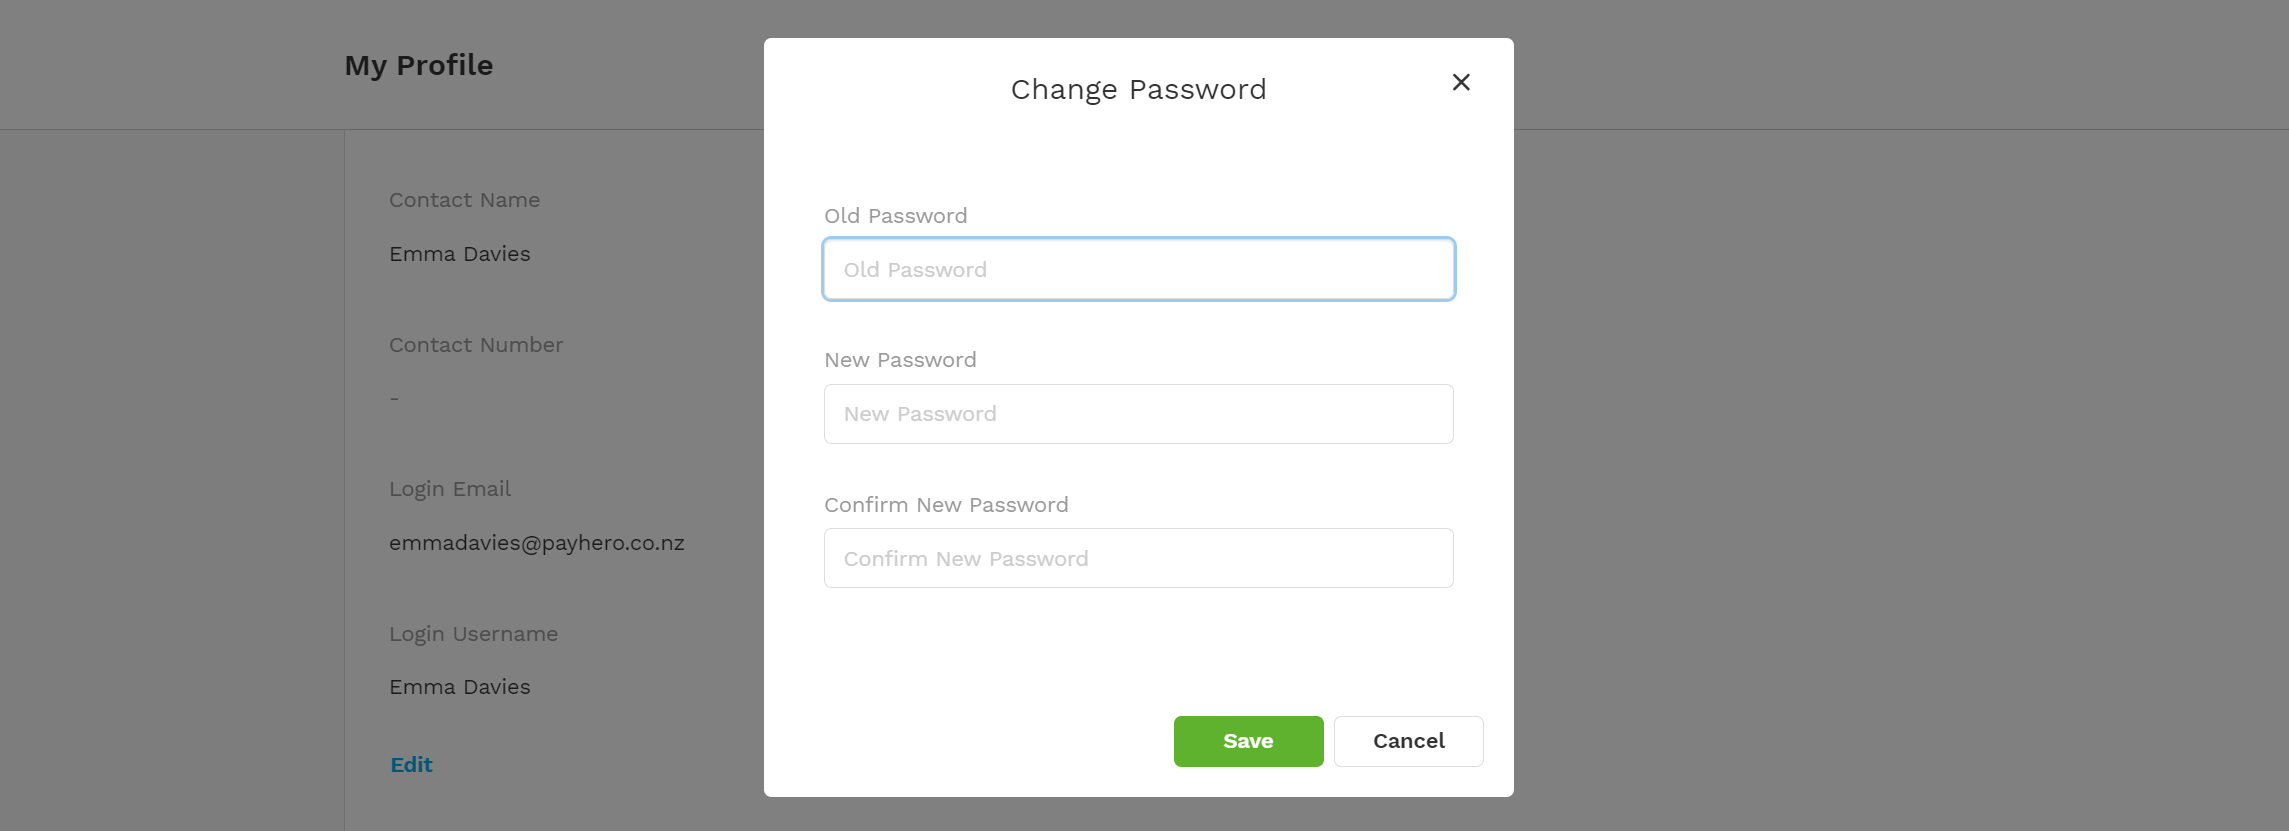 4_-_Change_Password.png